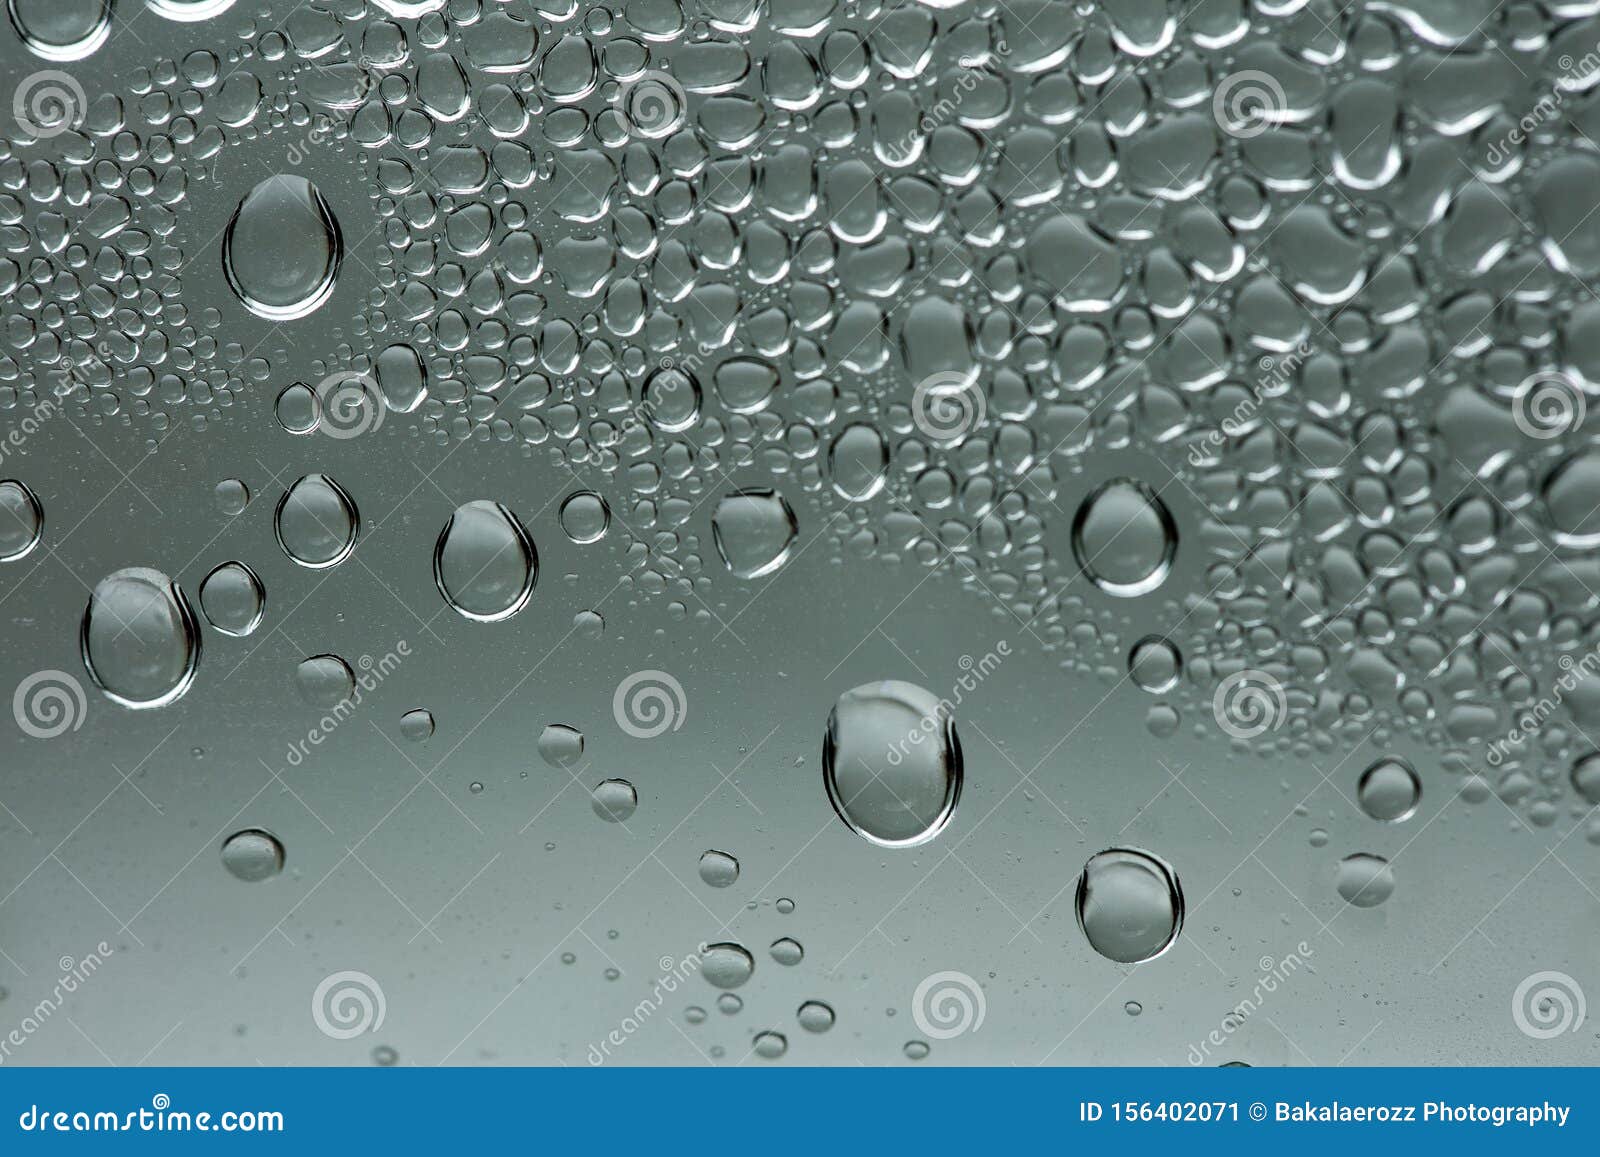 water drops macro from a plastic bottle fifty megapixels